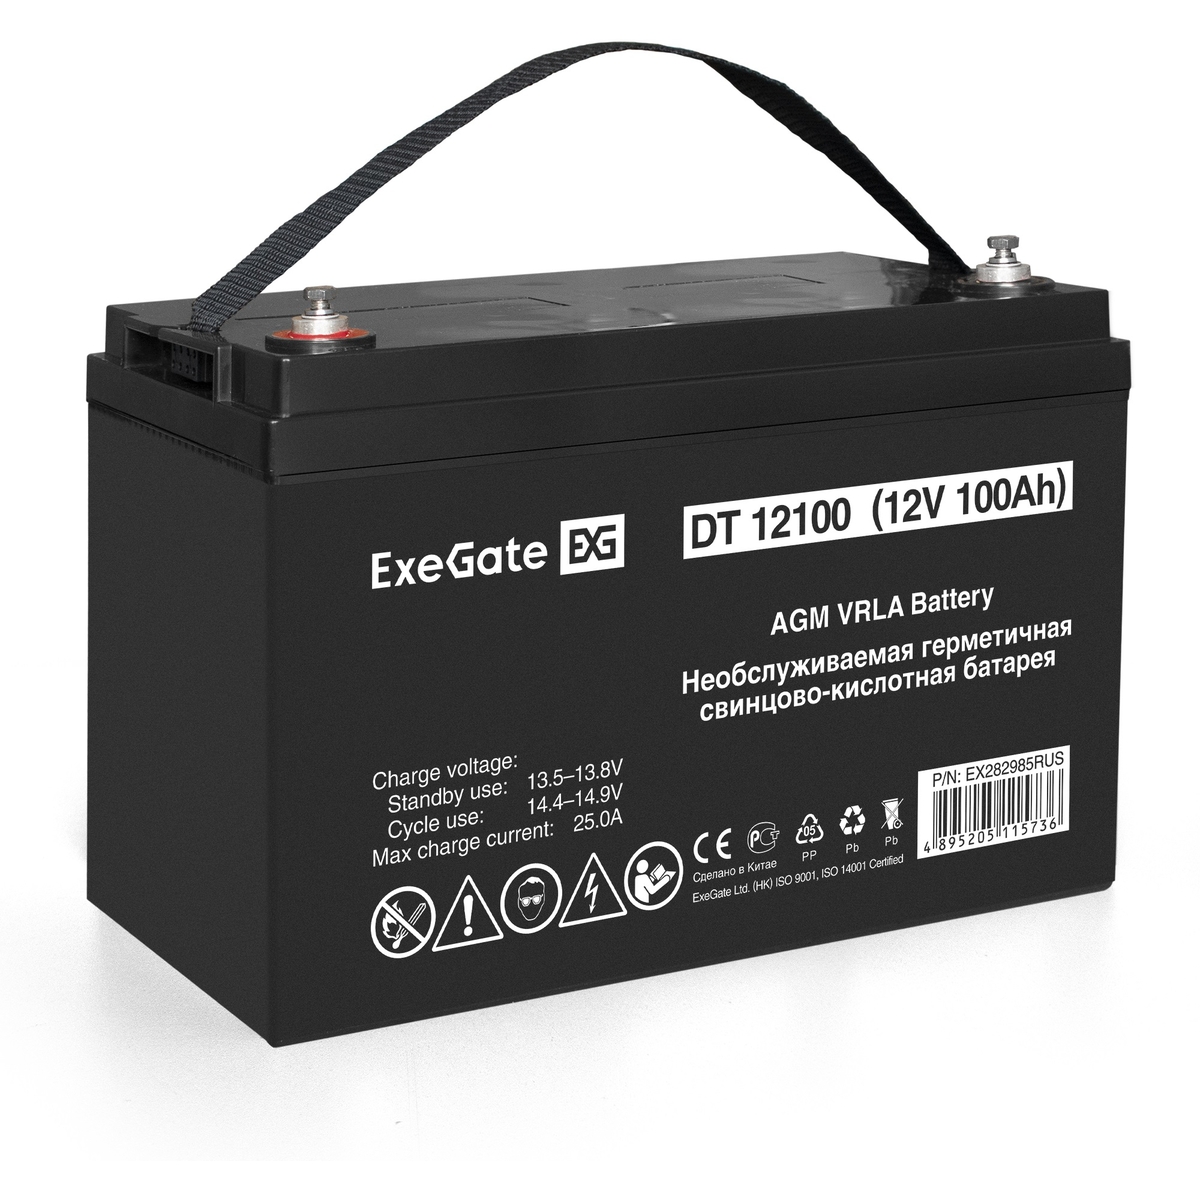 UPS set EX295997 + battery 100Ah EX282985 1 piece